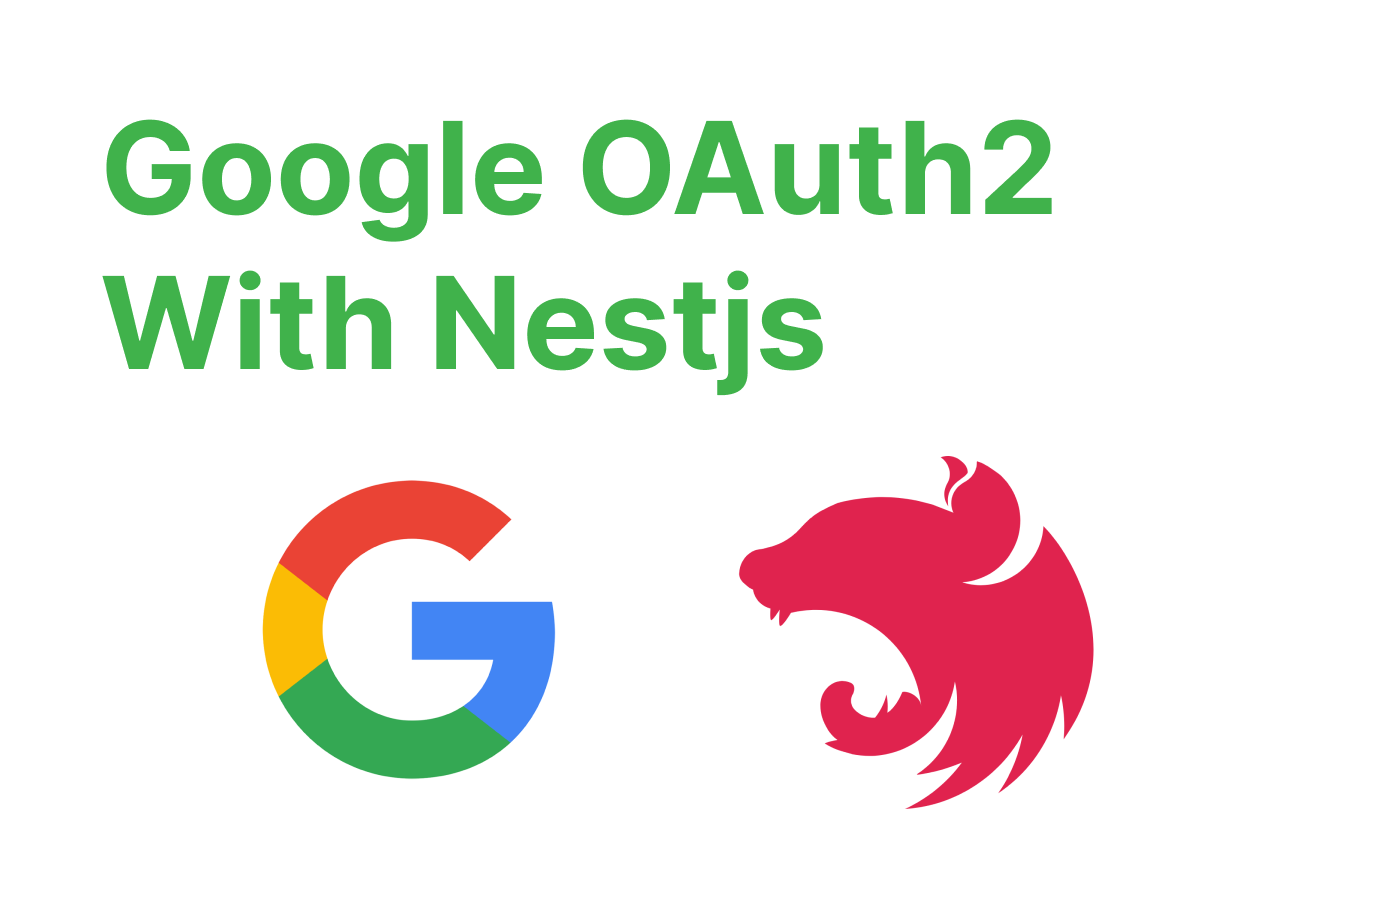 Google and NestJs logos